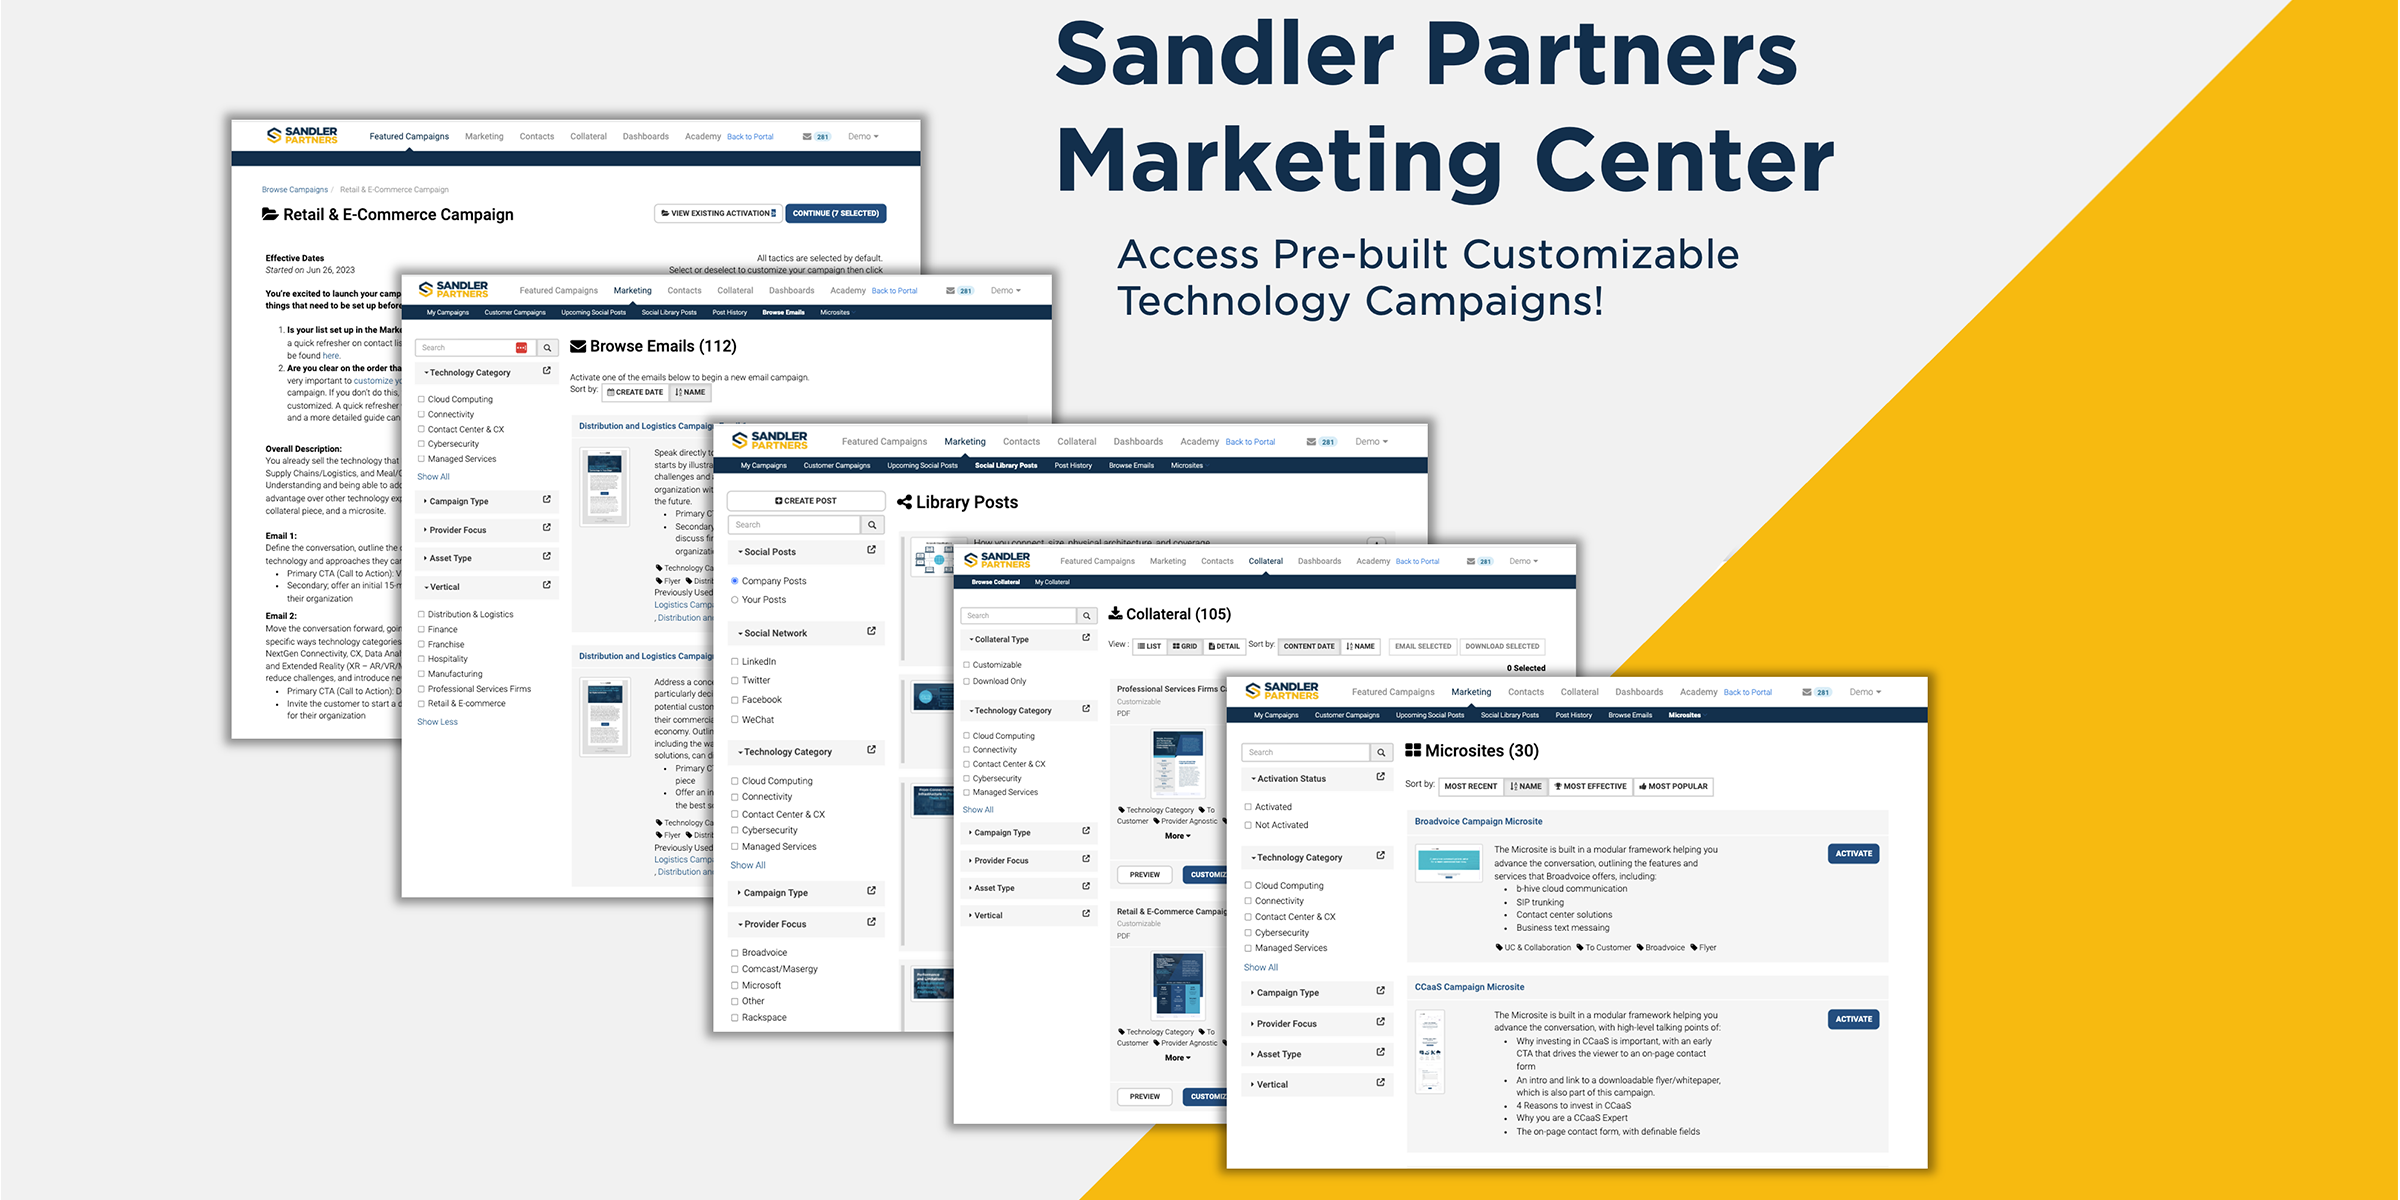 Sandler Partners Marketing Center